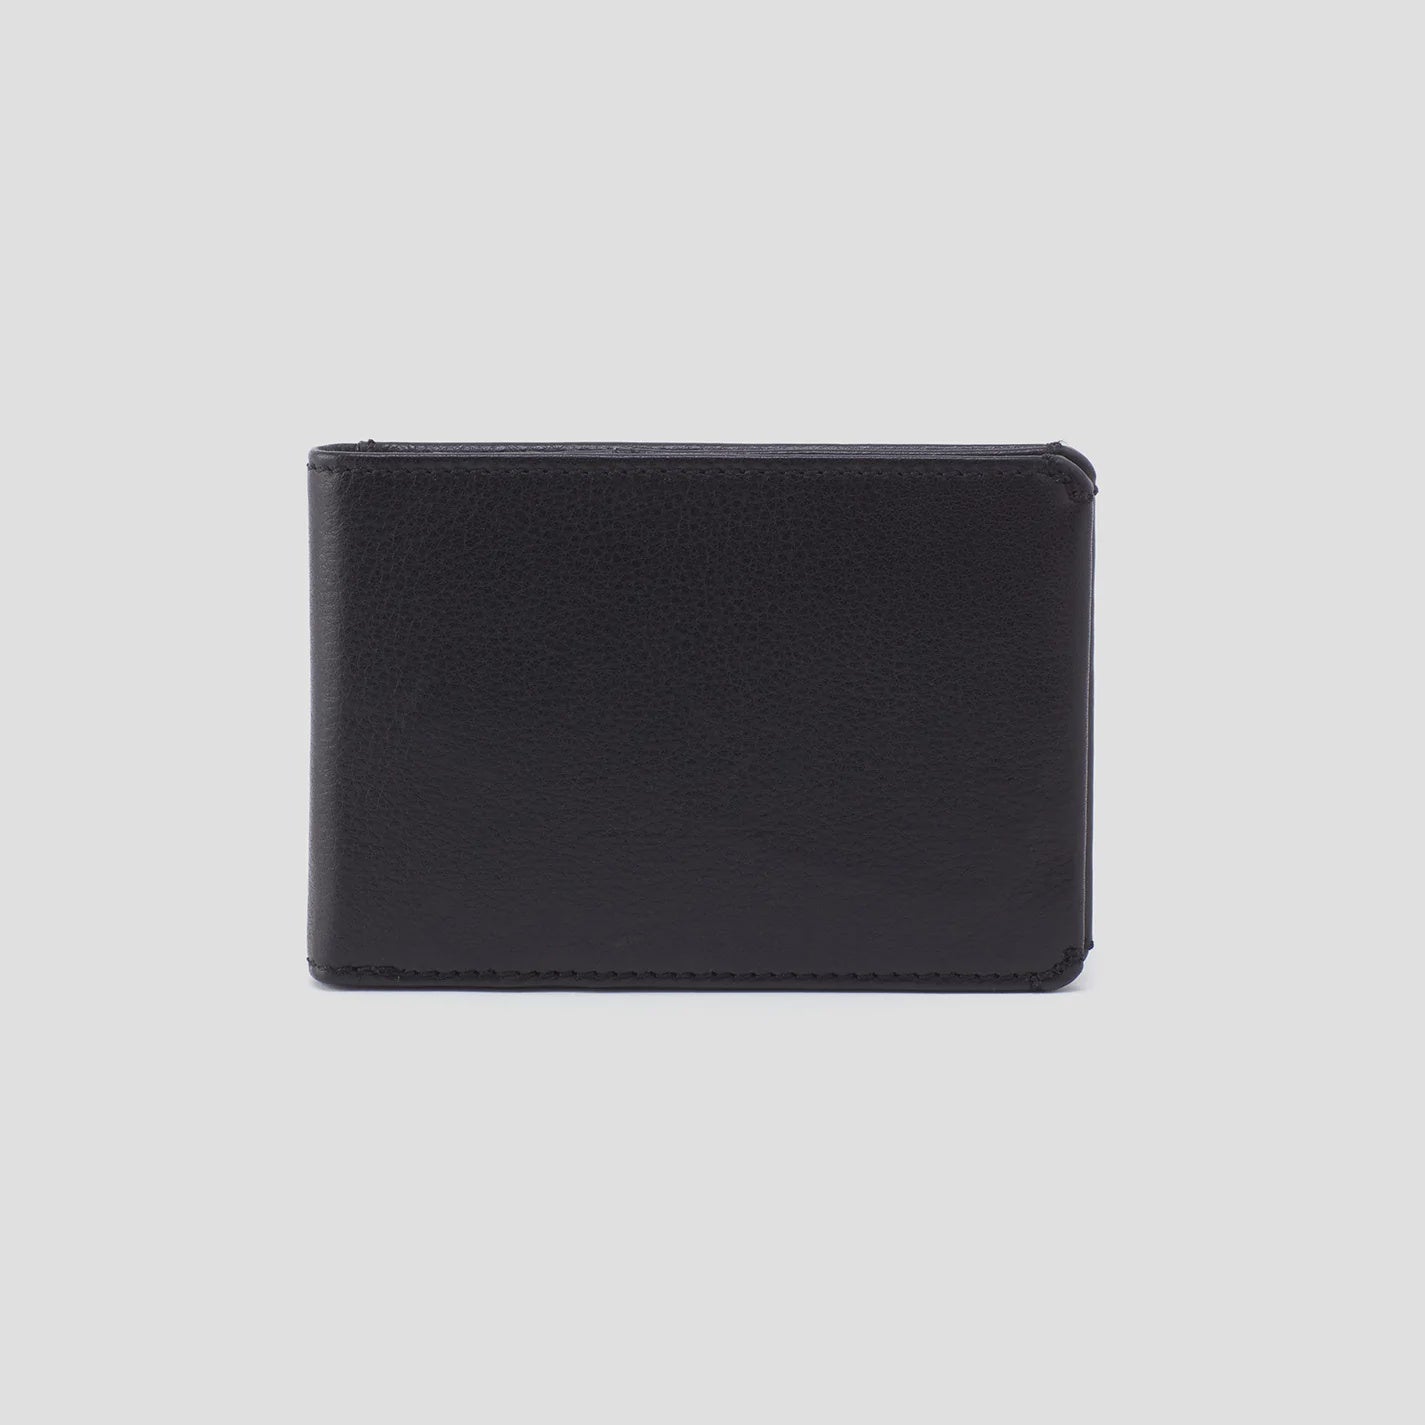 Hobo Men's Bifold (Black) Wallet - Andy Thornal Company